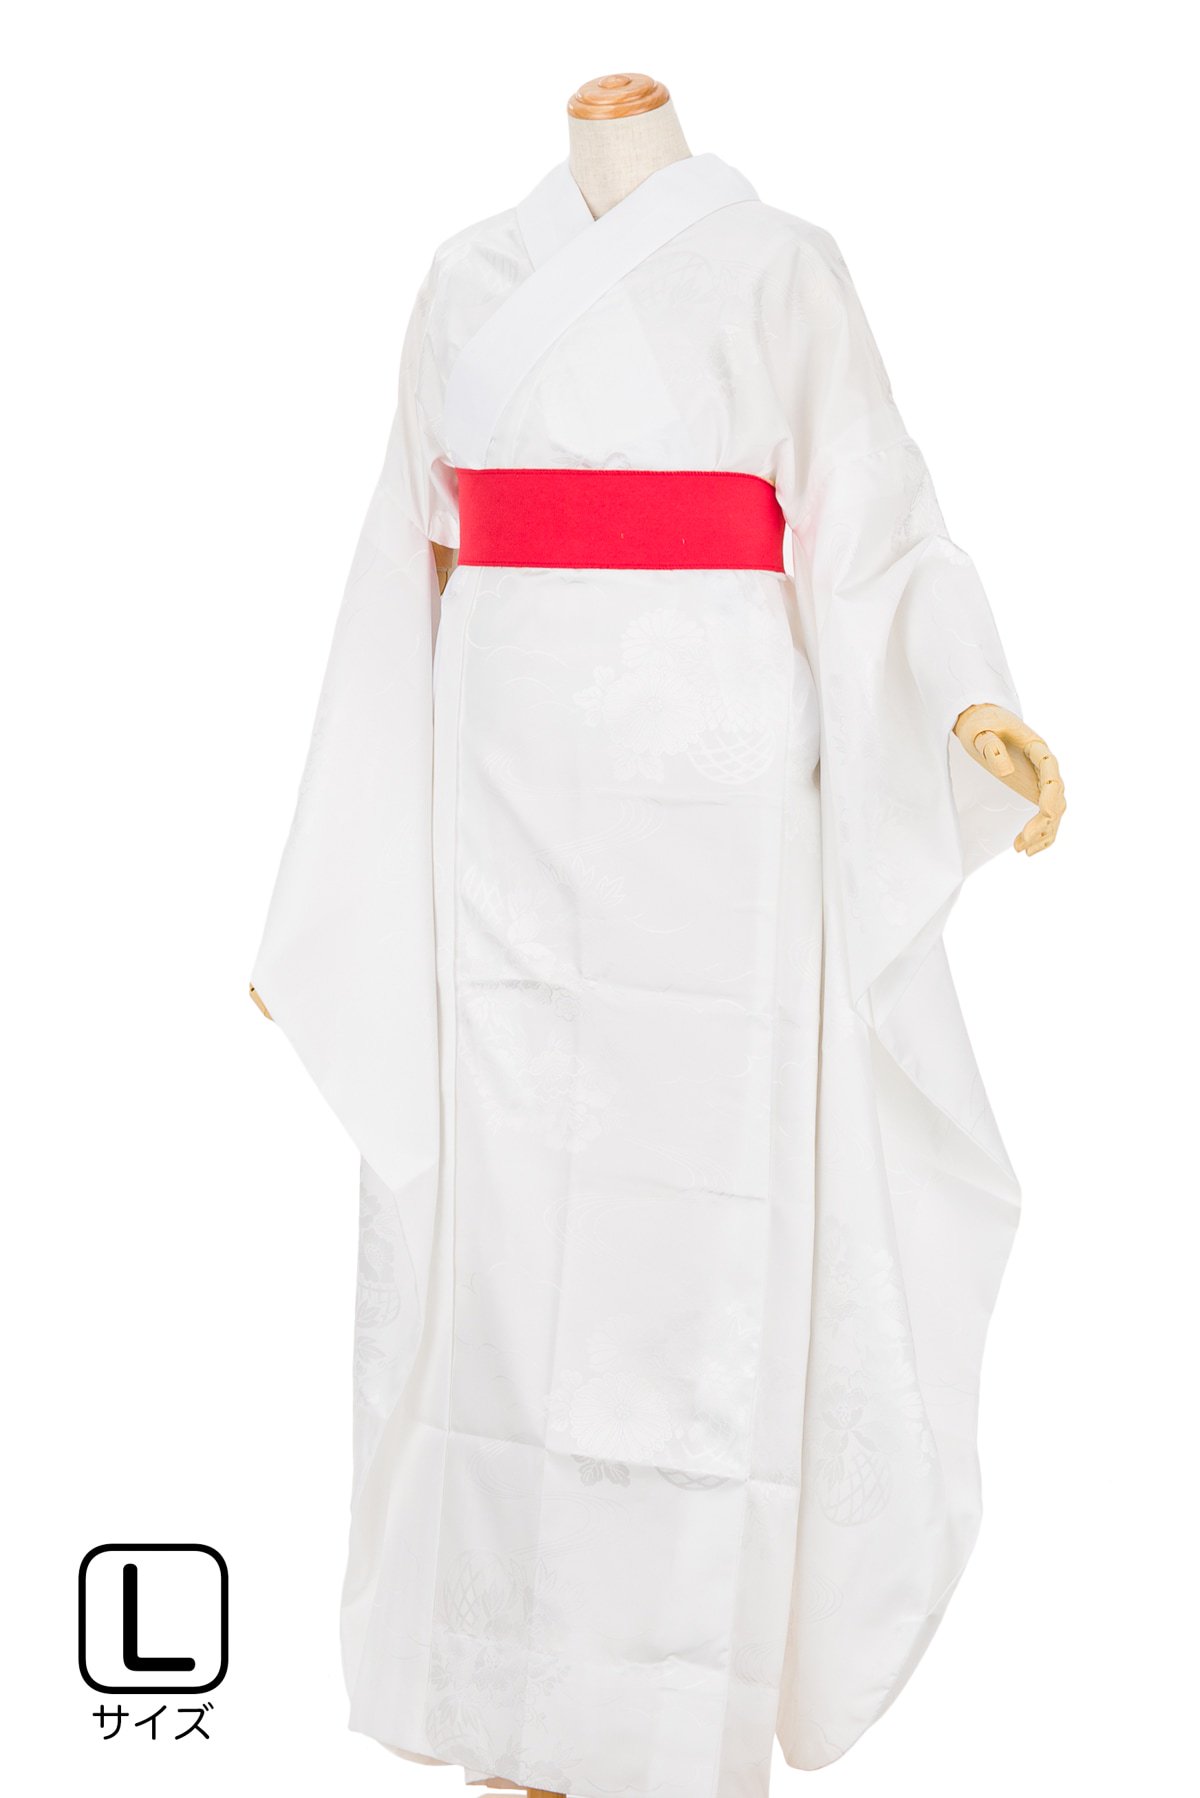 L】新品 日本製 振袖用長襦袢 白 - からん::アンティーク着物 